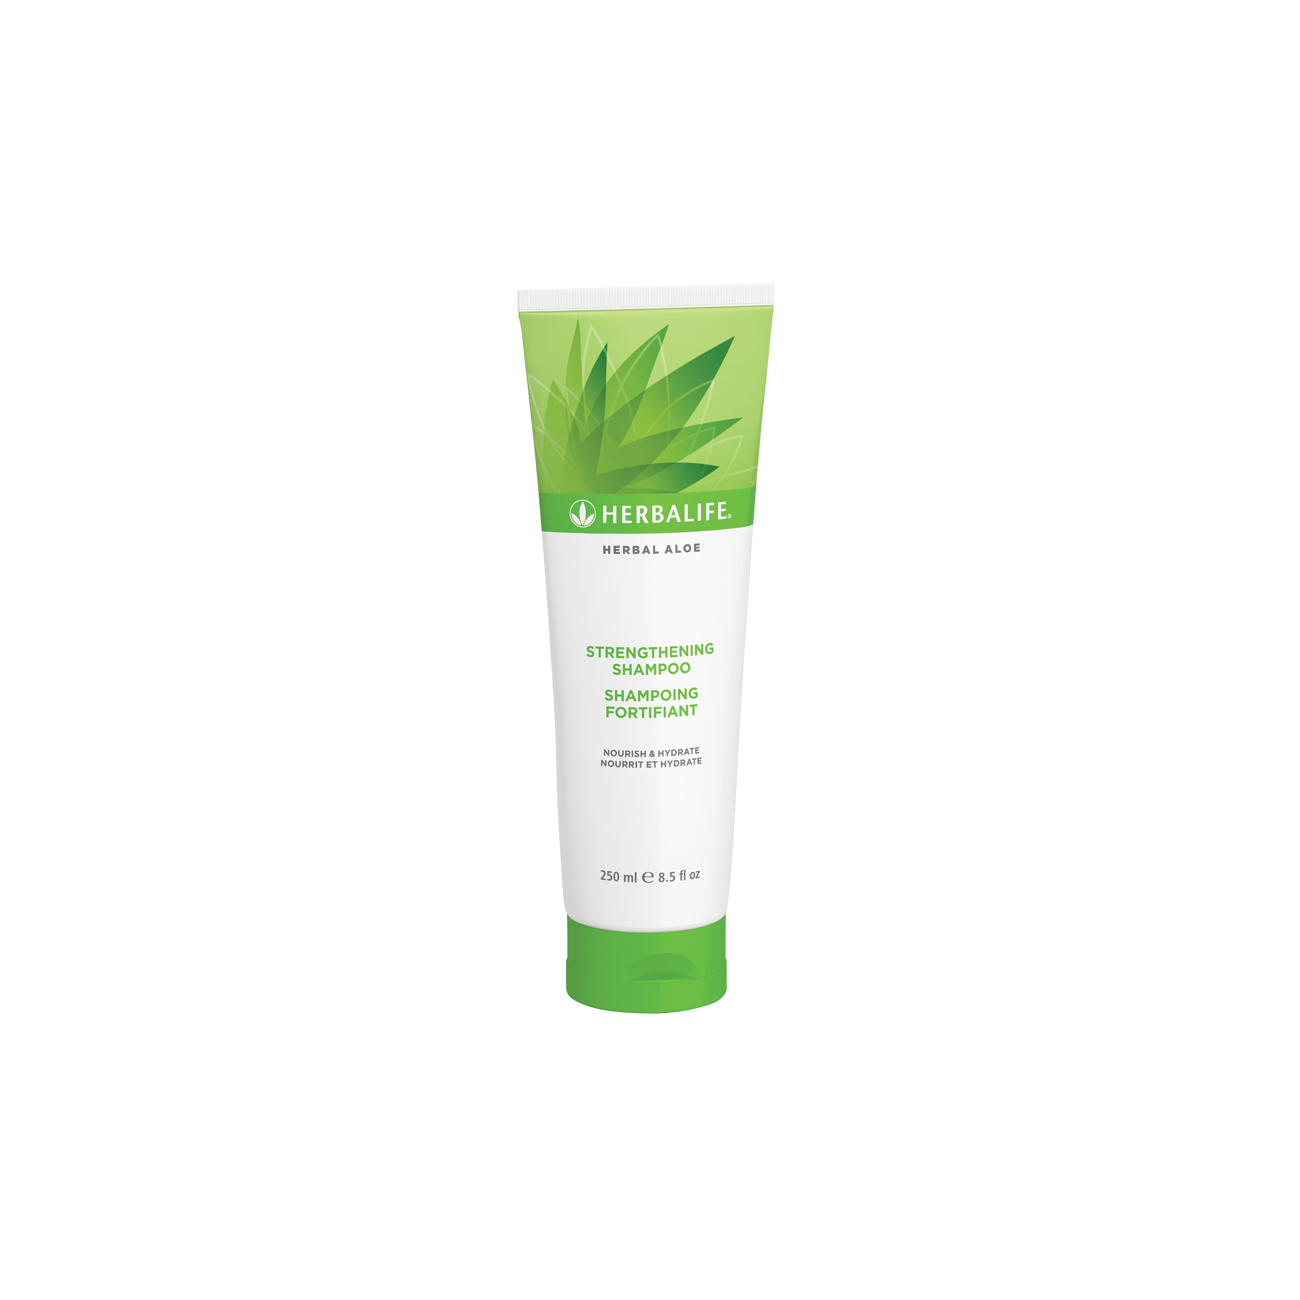 Herbal Aloe Strengthening Shampoo  product shot